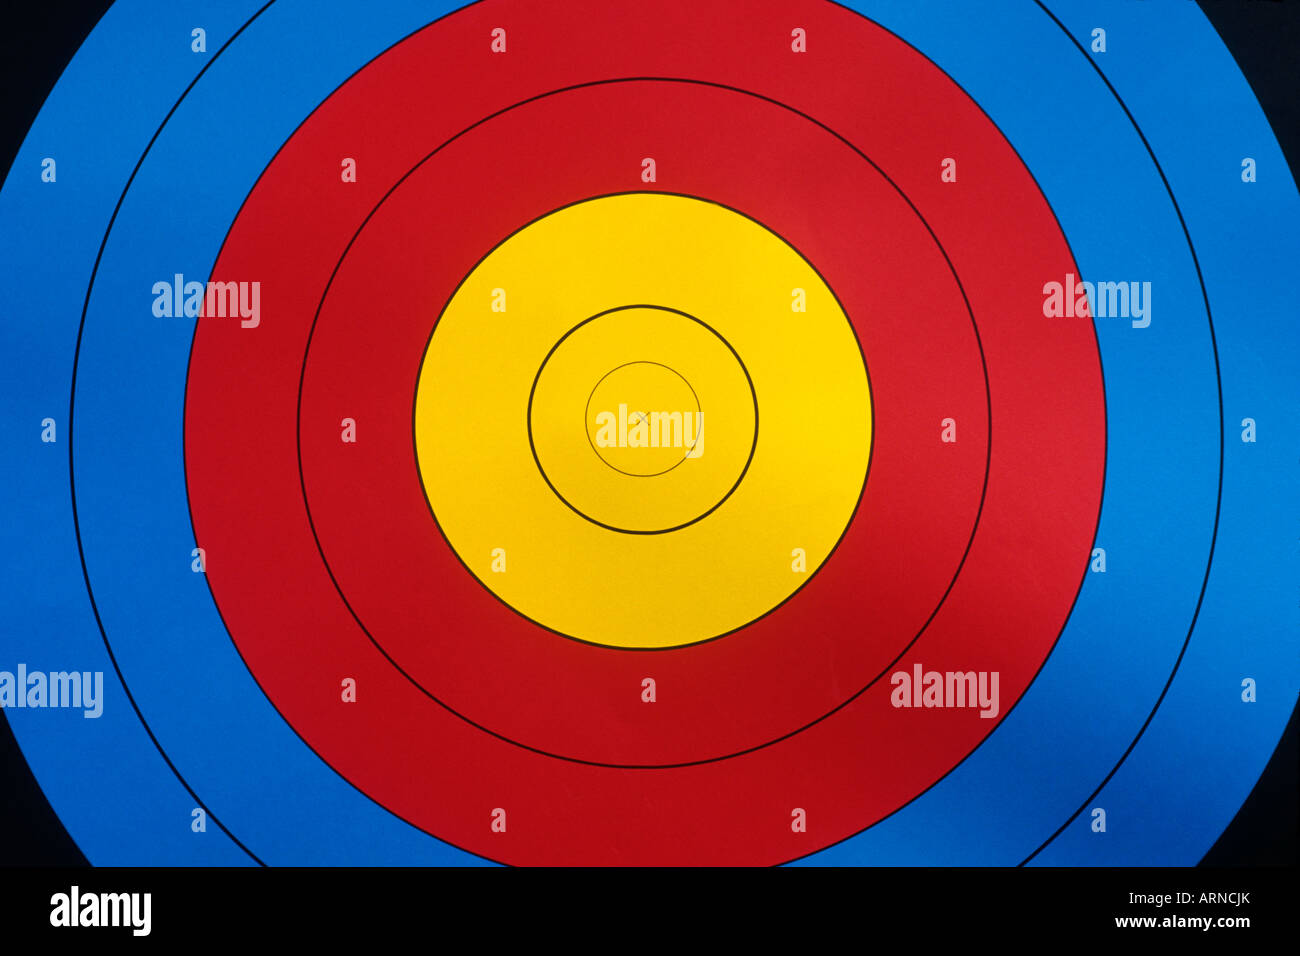 Archery target Stock Photo